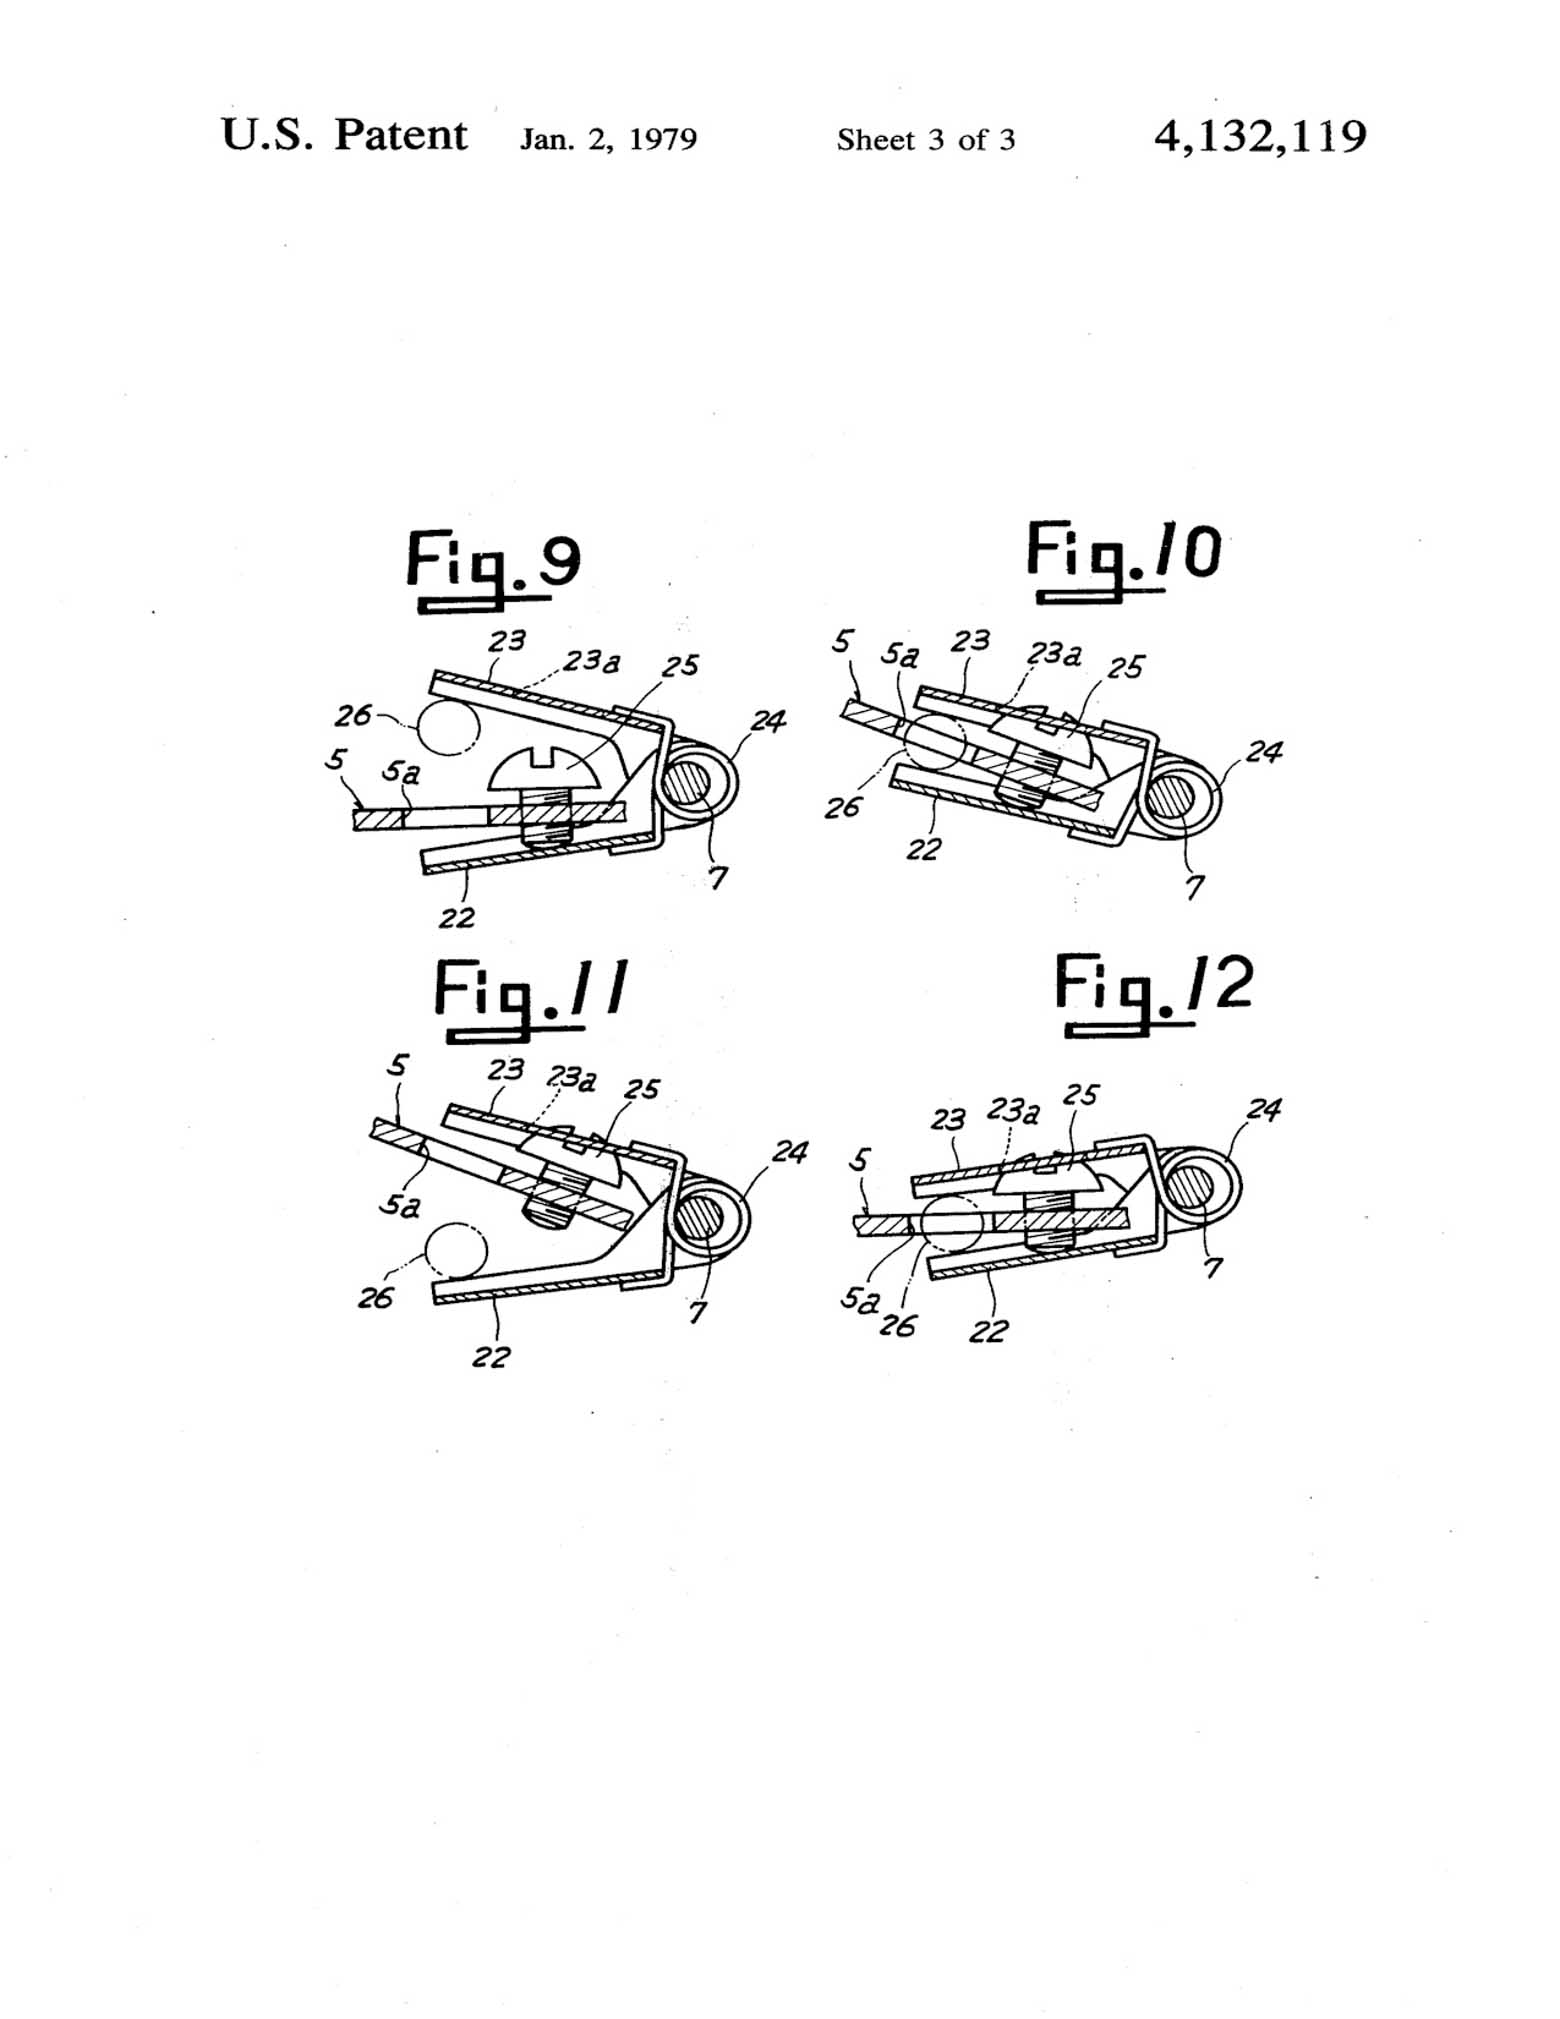 US Patent 4,132,119 - Shimano Positron scan 8 main image